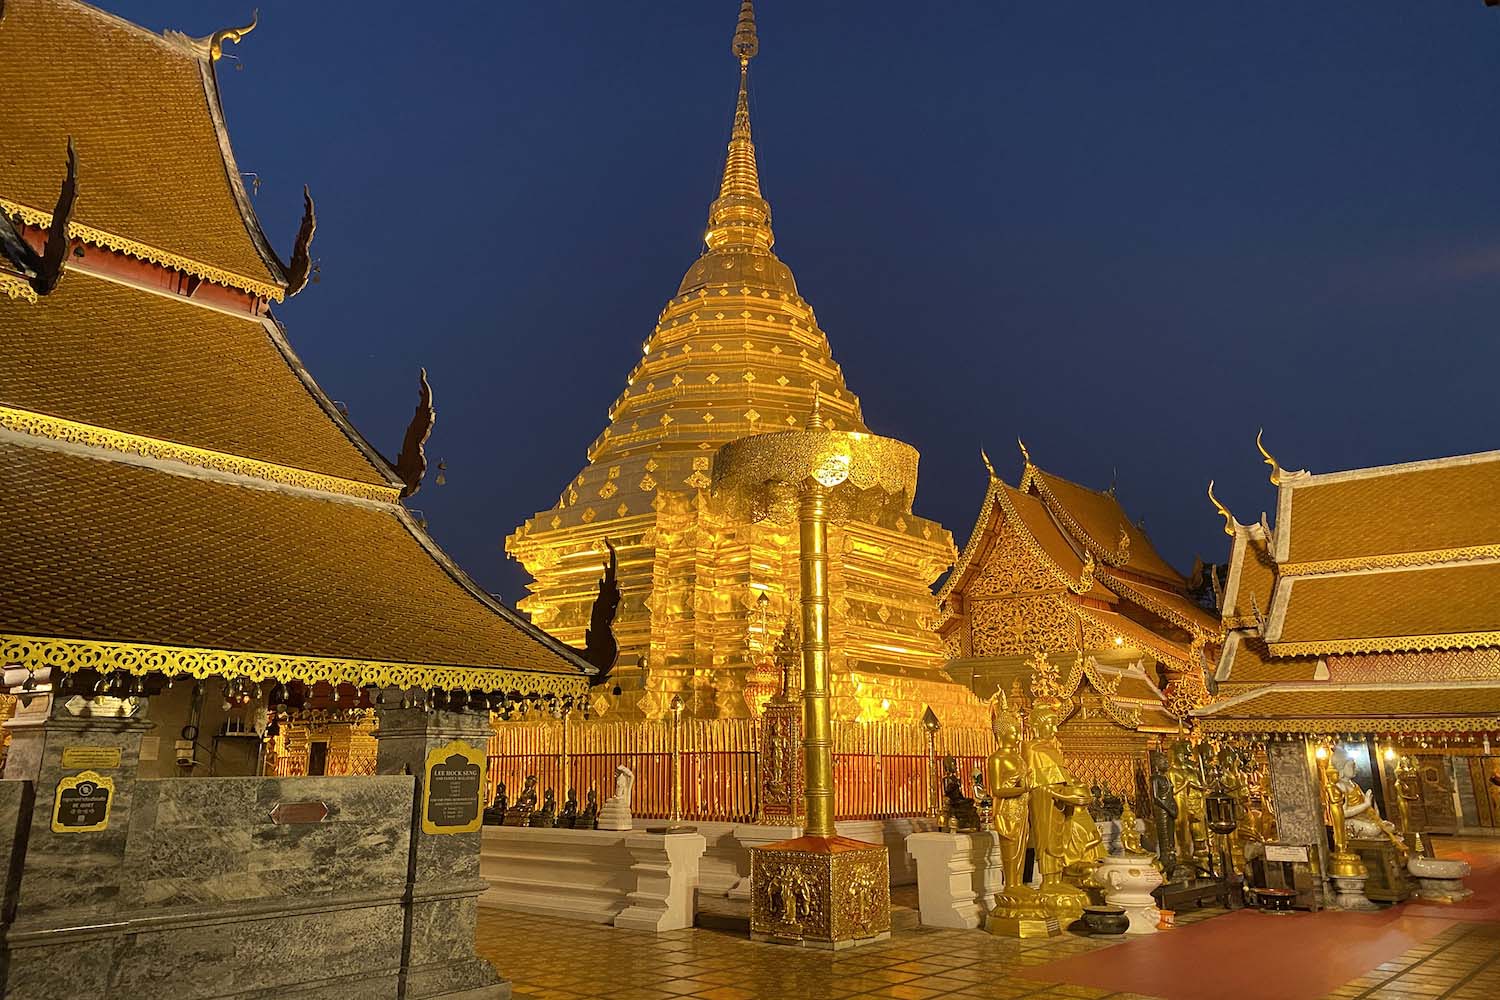 Doi Suthep night tour - The golden pagoda at Doi Suthep temple at night glowing